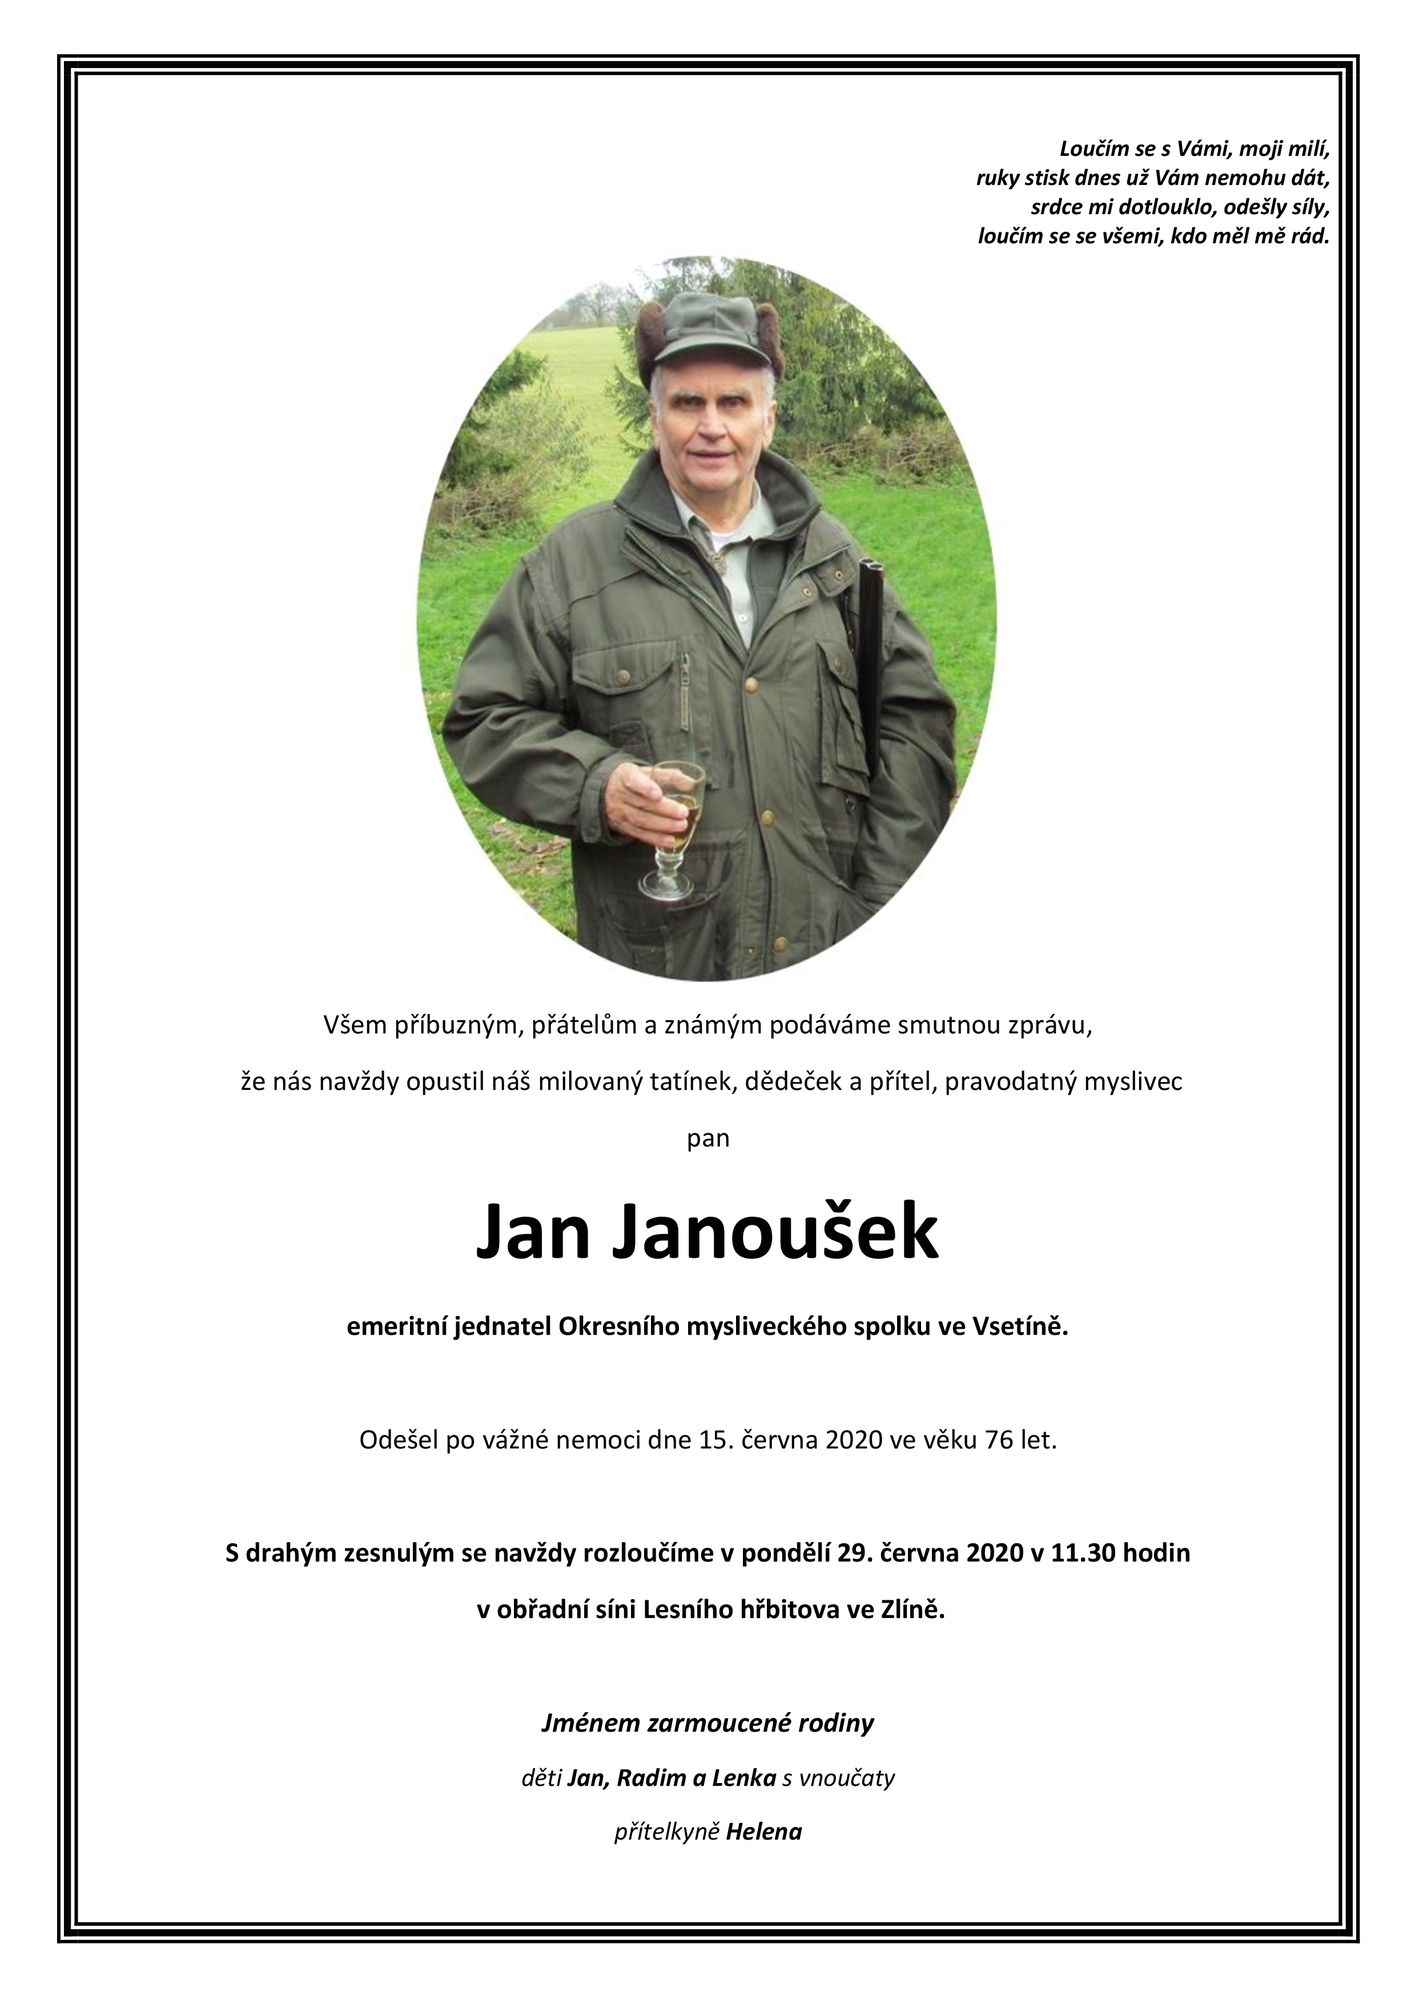 Jan Janoušek